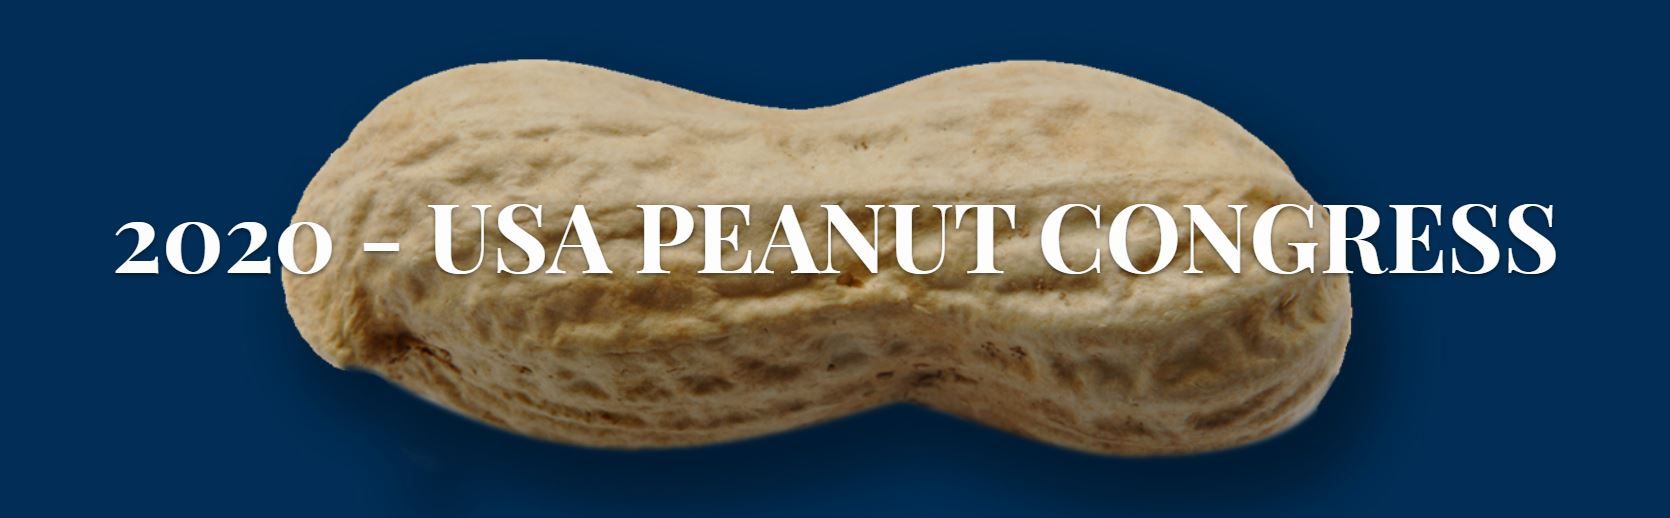 USA Peanut Congress 2020 International Nut & Dried Fruit Council